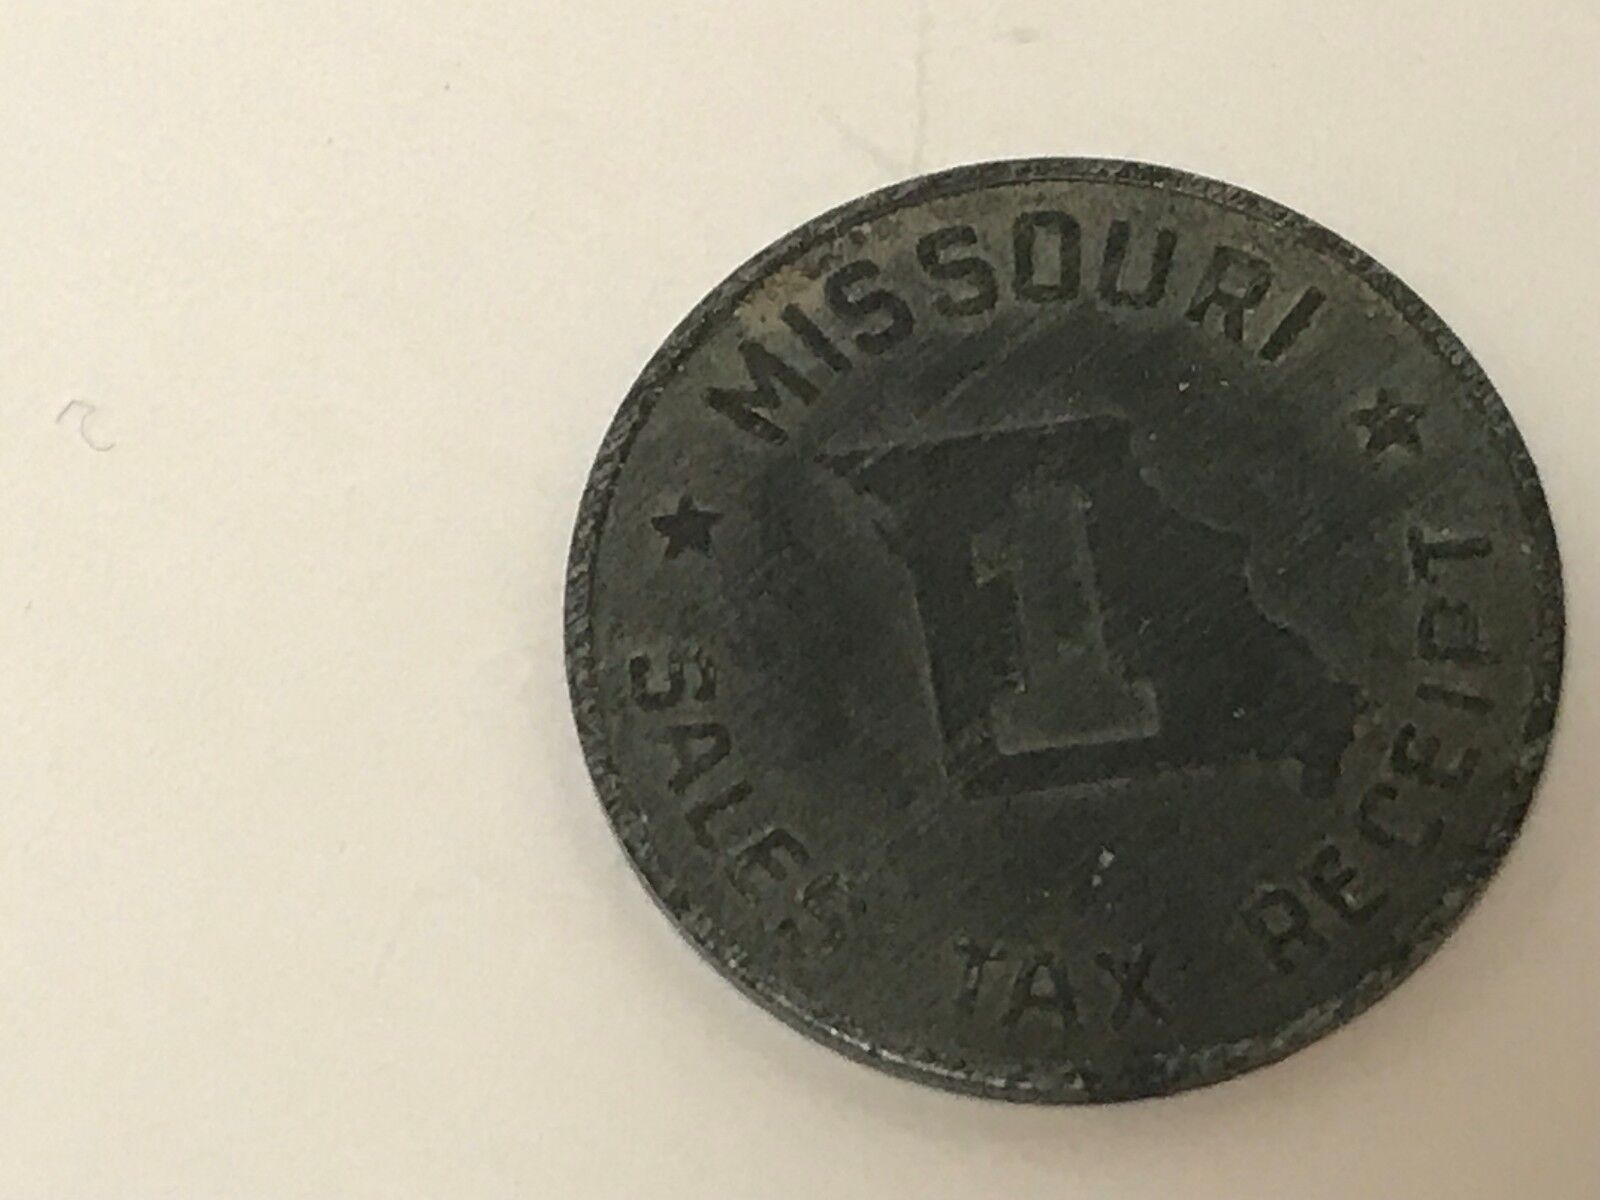 Vintage Sales Tax Receipt Missouri Set of 2 Без бренда - фотография #6